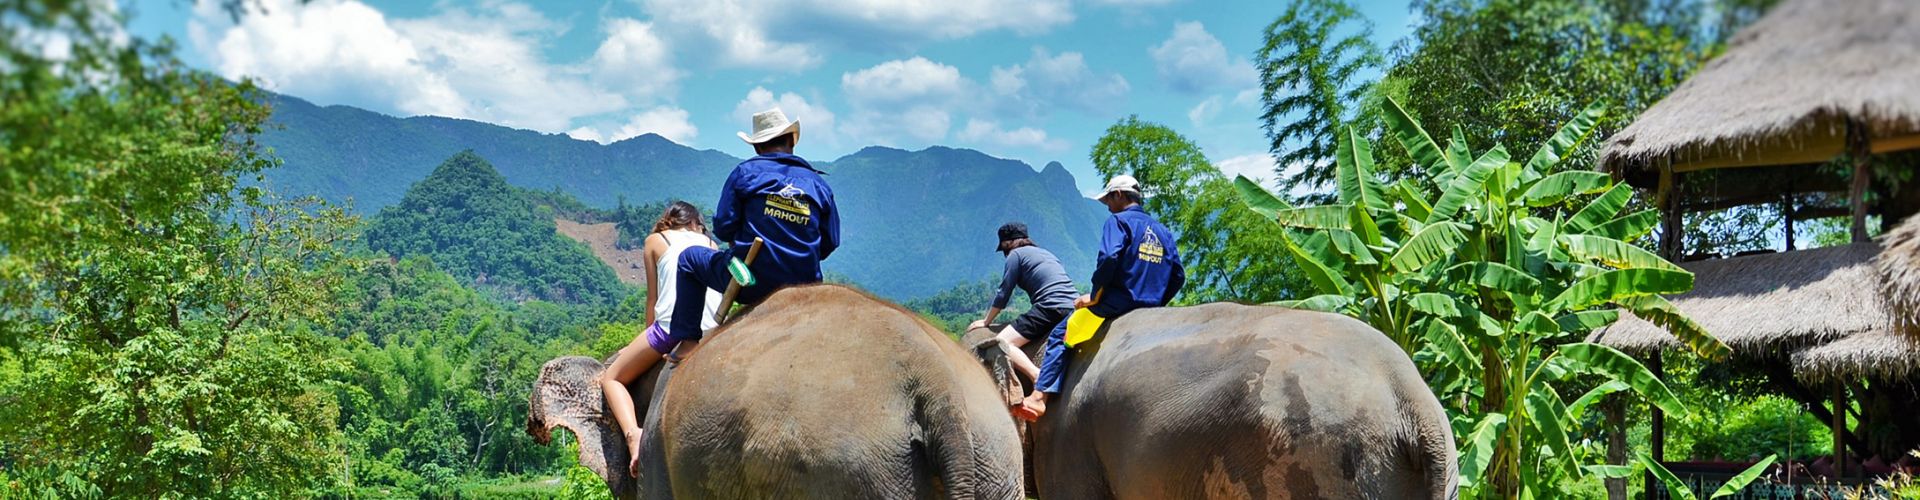 Top Attractions in Laos